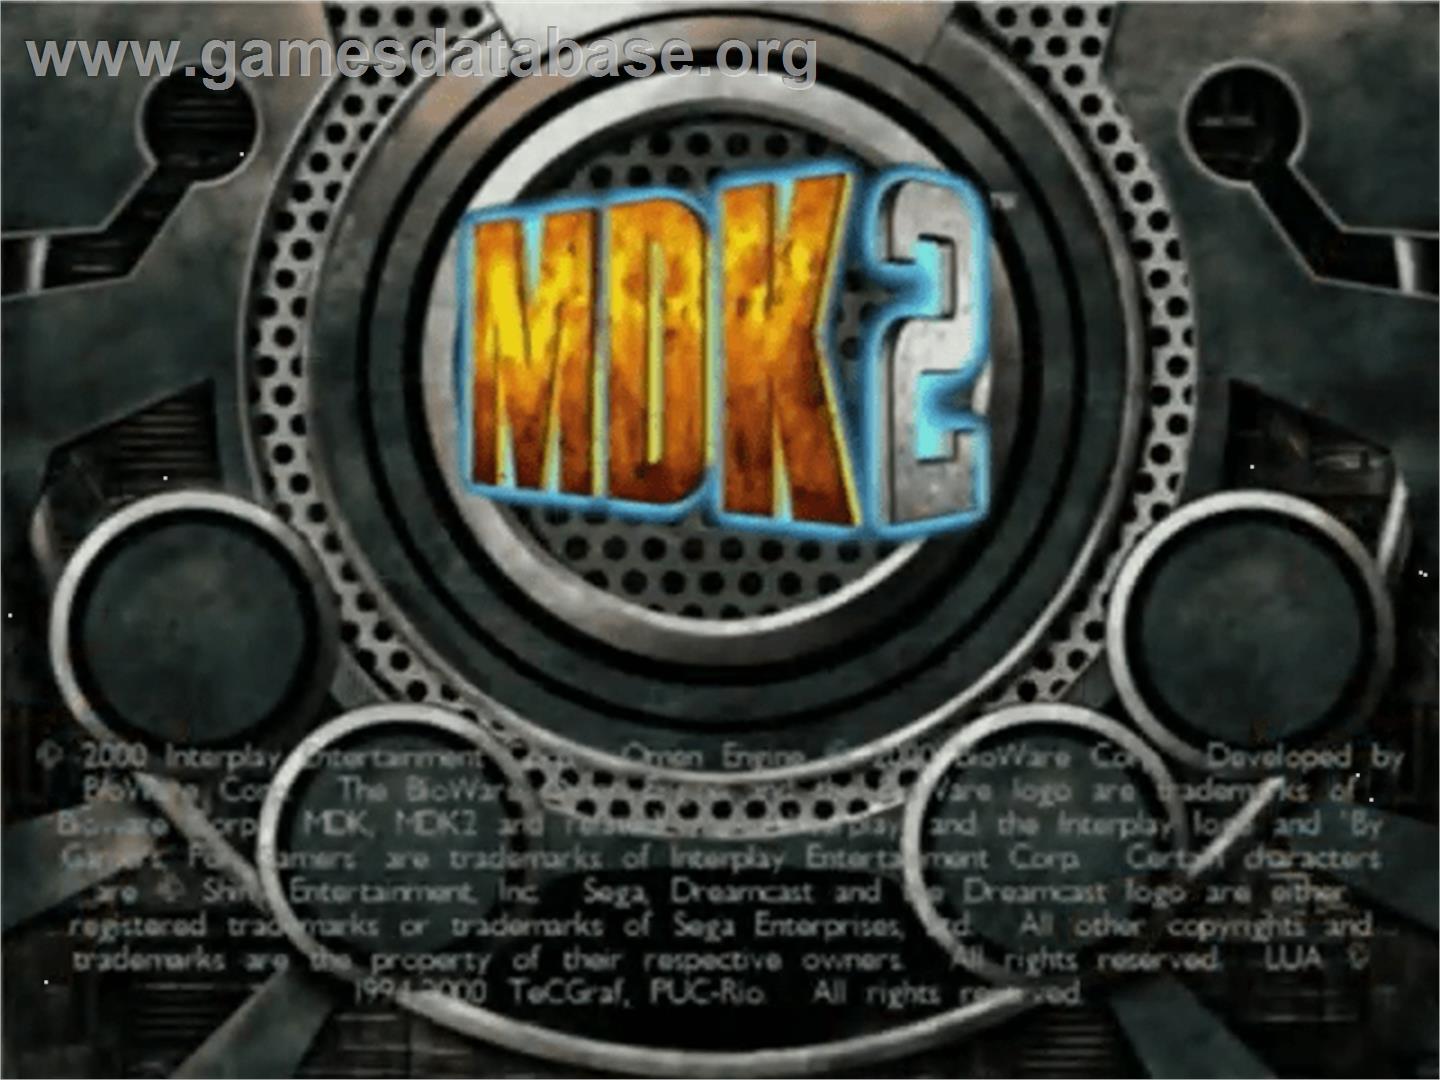 MDK2 - Sega Dreamcast - Artwork - Title Screen